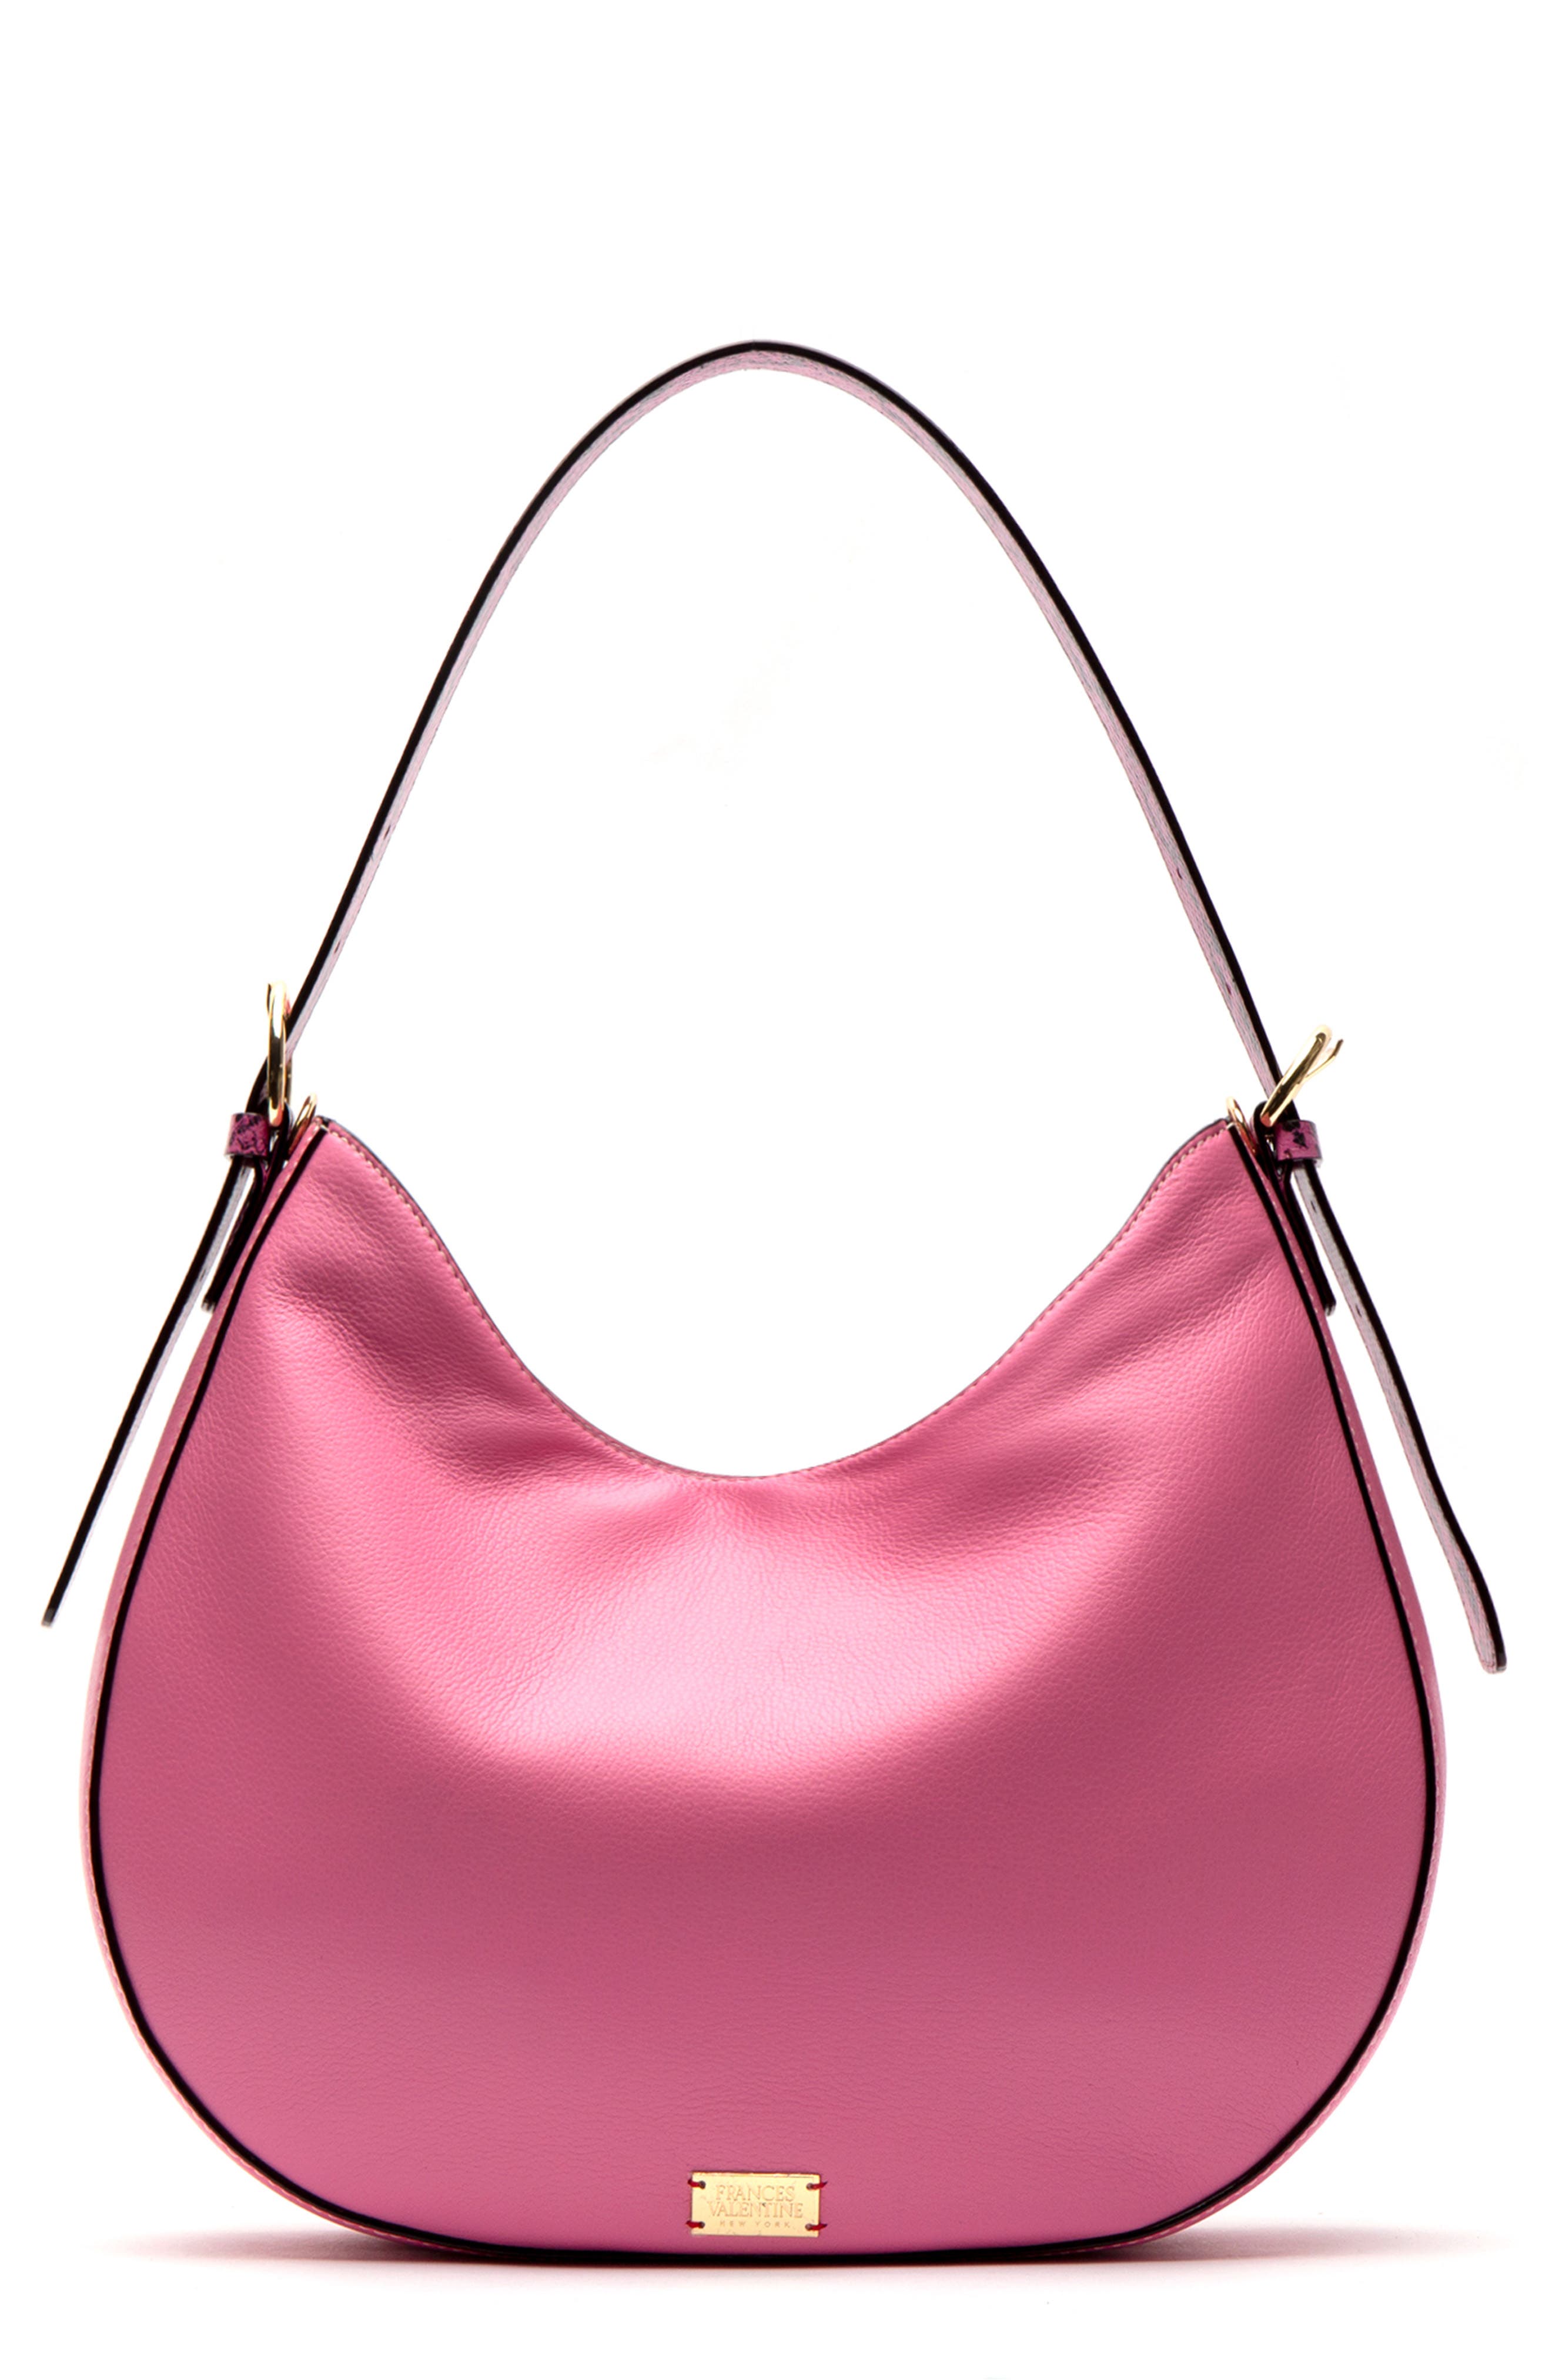 Frances Valentine Handbags on Sale, 57% OFF | www.gruposincom.es